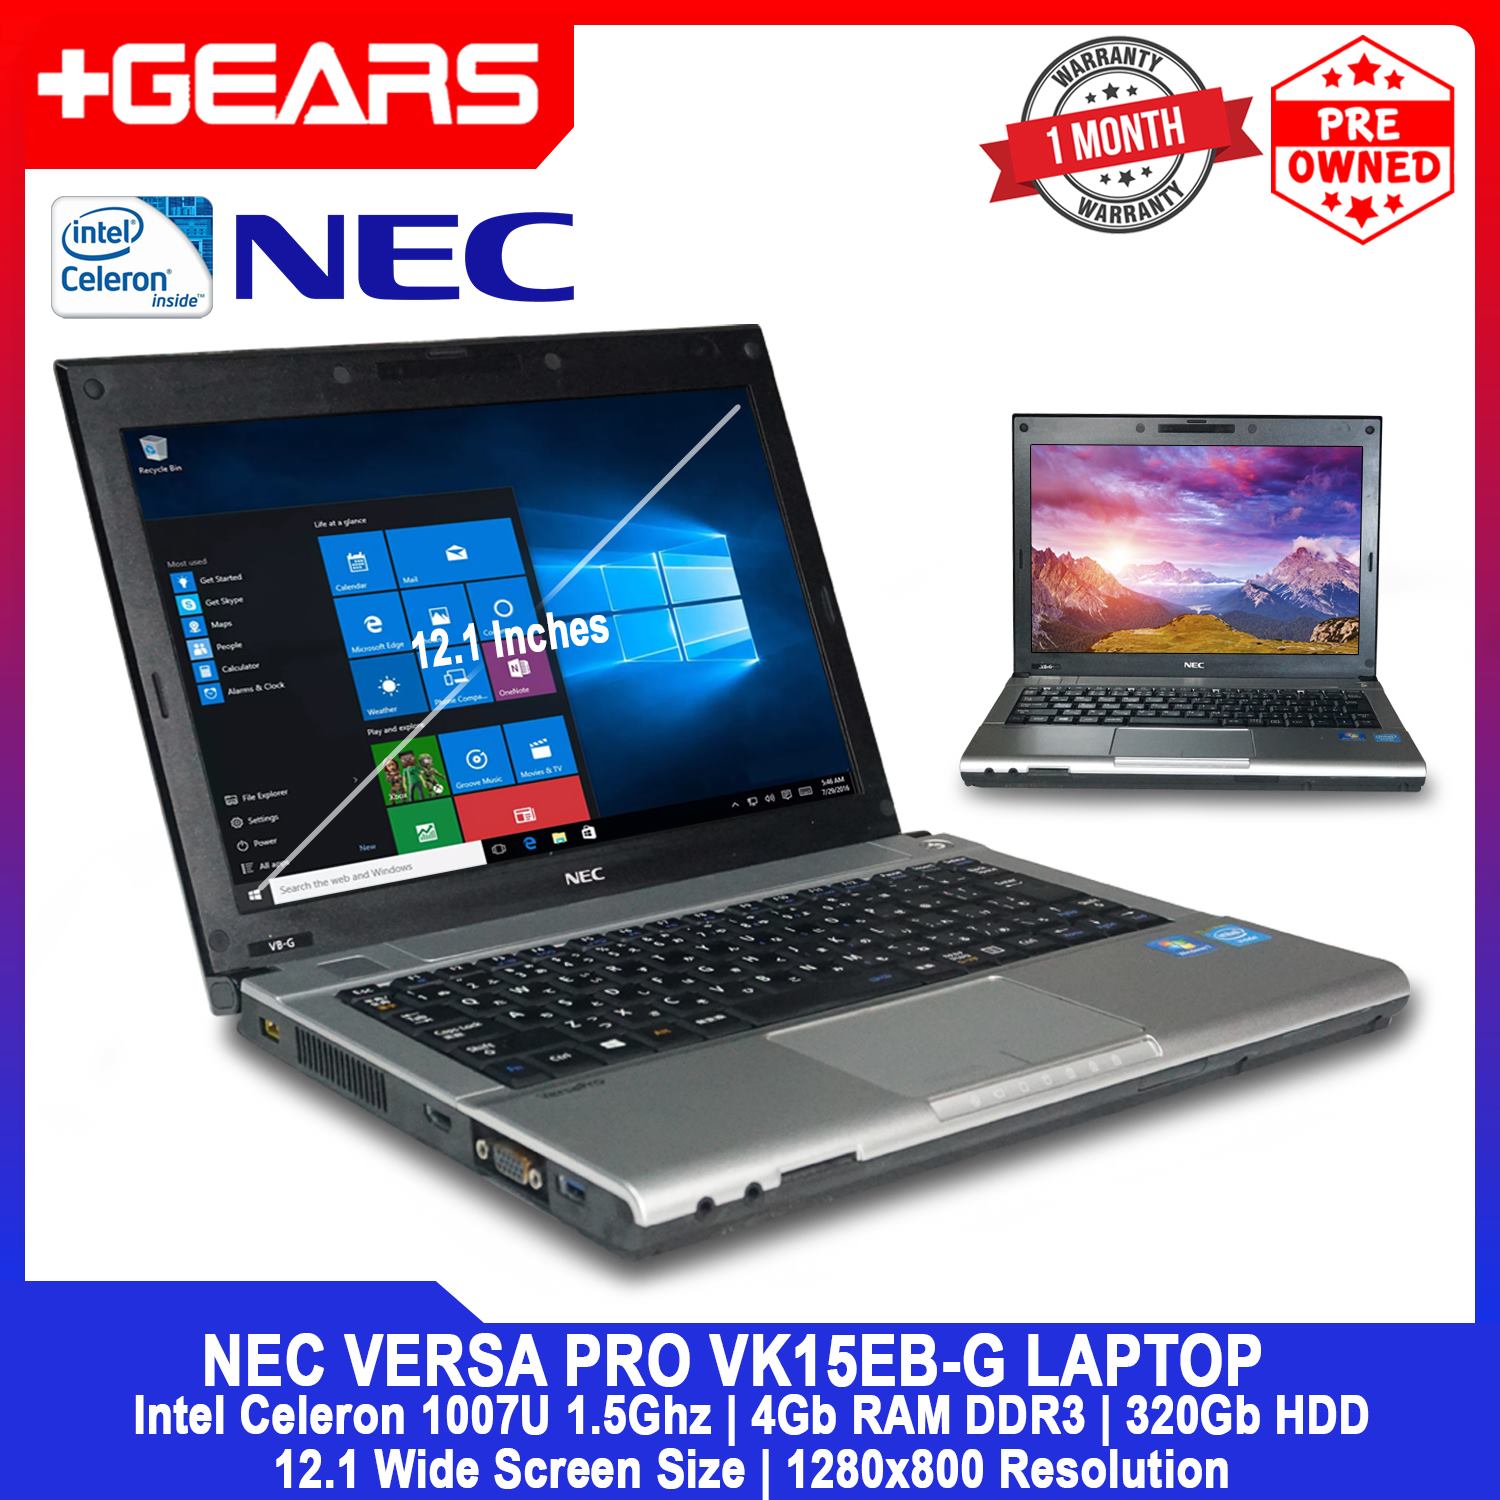 Nec Versa Pro VK15EB-G Notebook Laptop | Intel Celeron 1007u 4GB